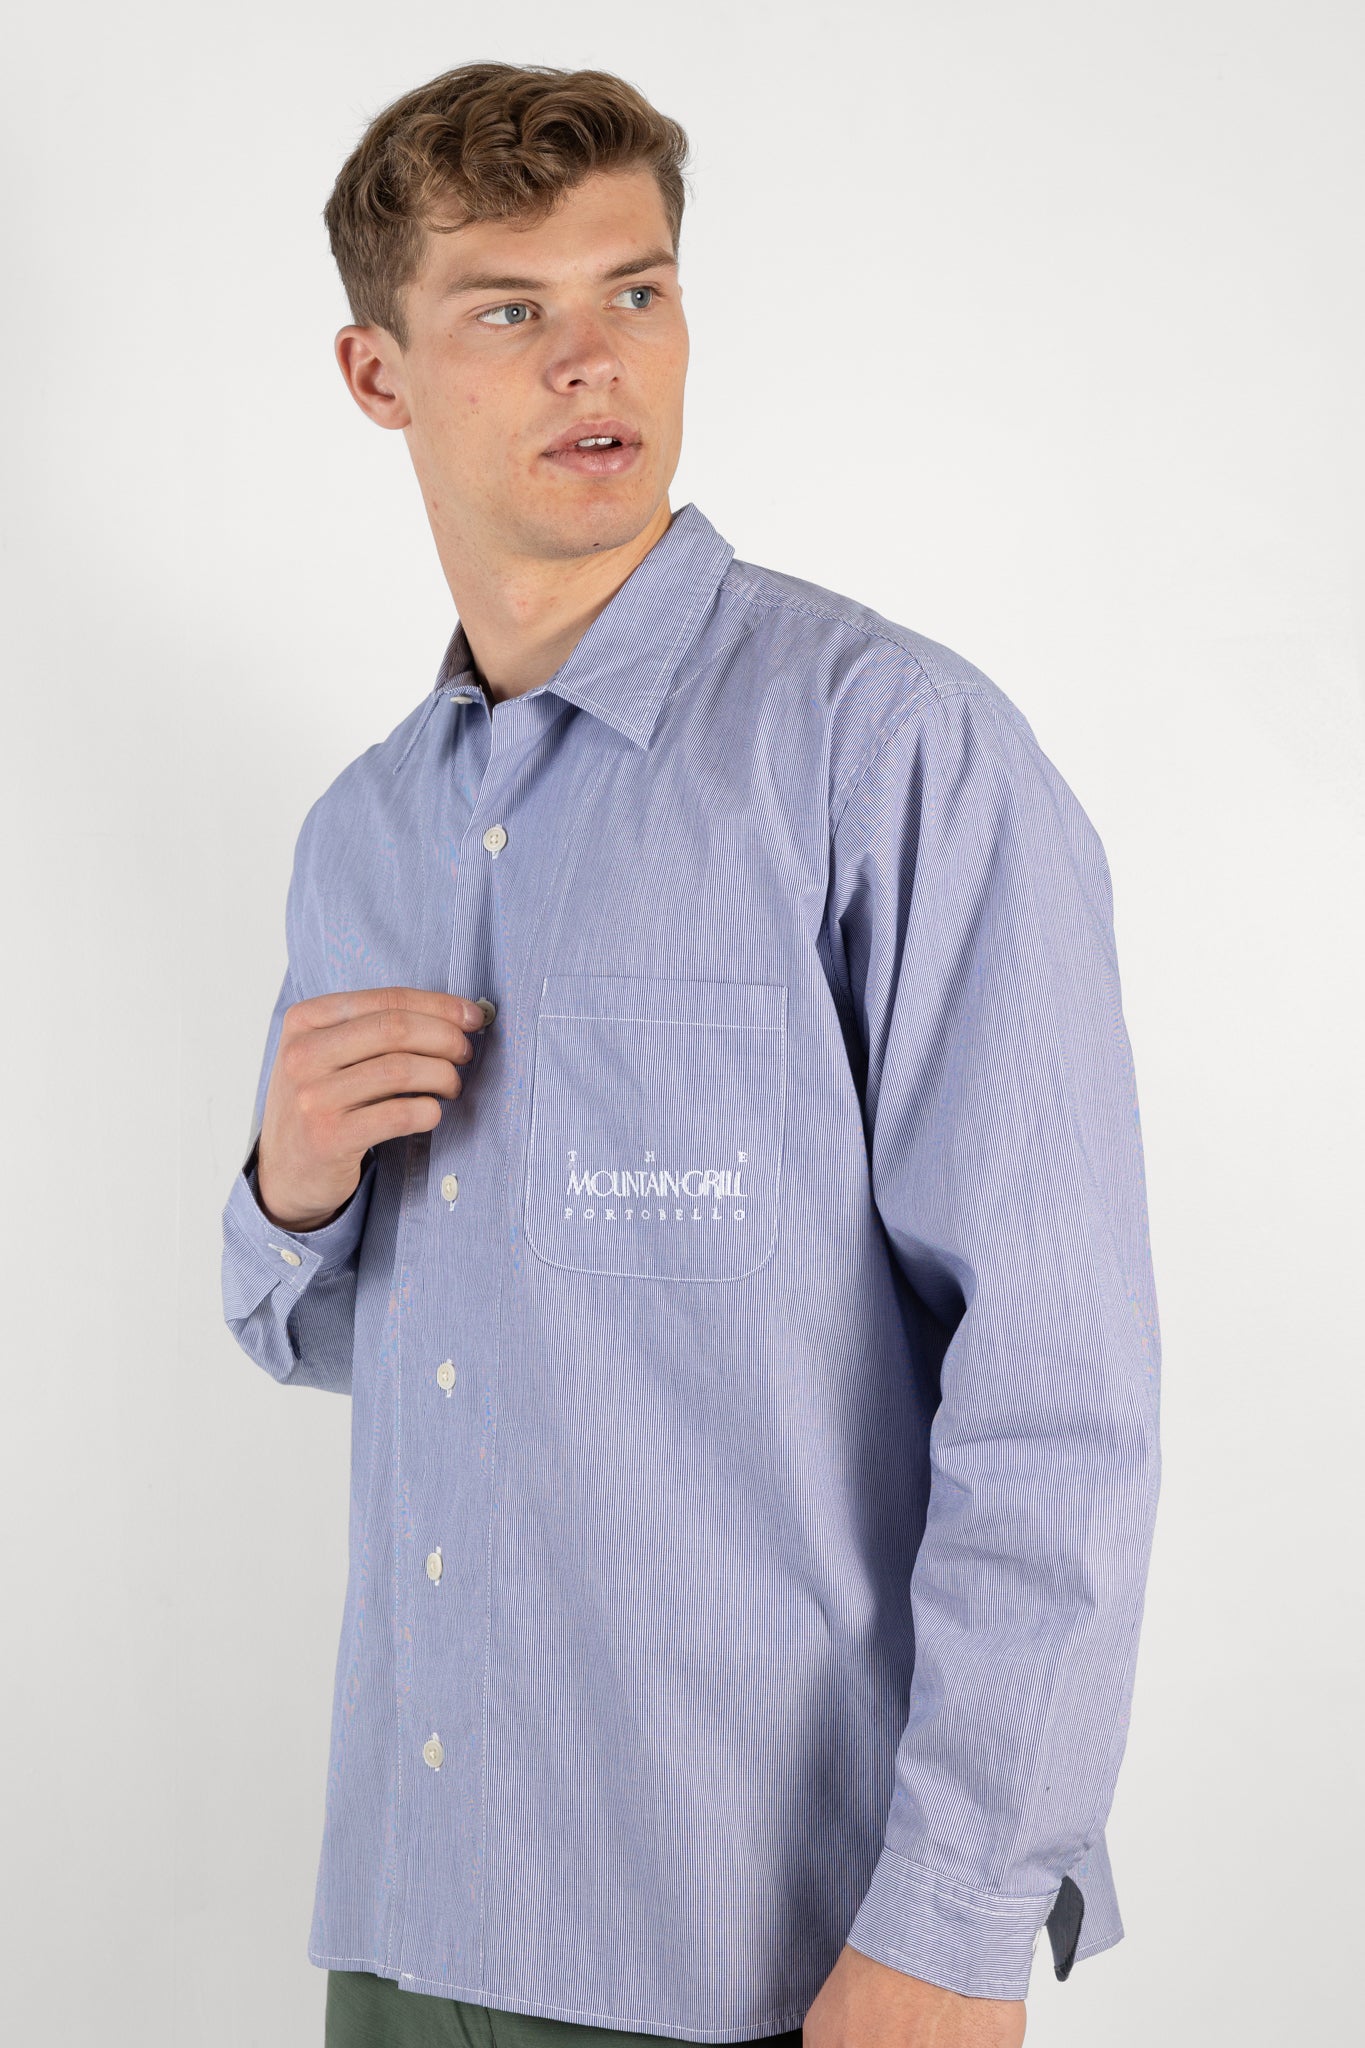 Mens Shirt | Garbstore embroidered Grande shirt | The Standard Store